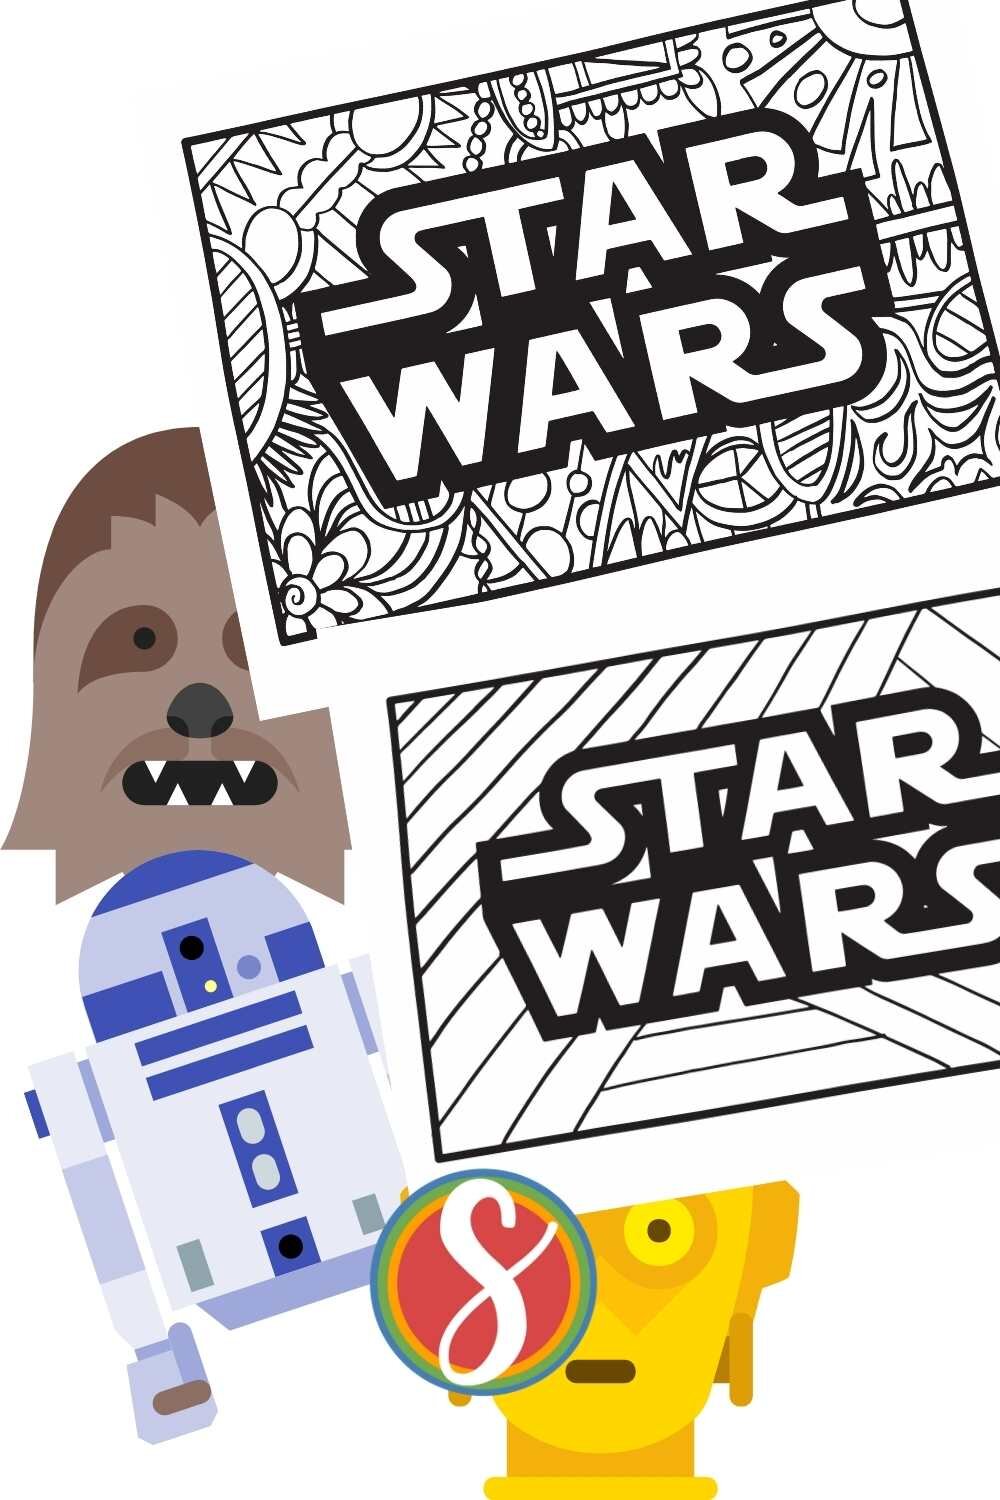 Free star wars logo coloring pages â stevie doodles